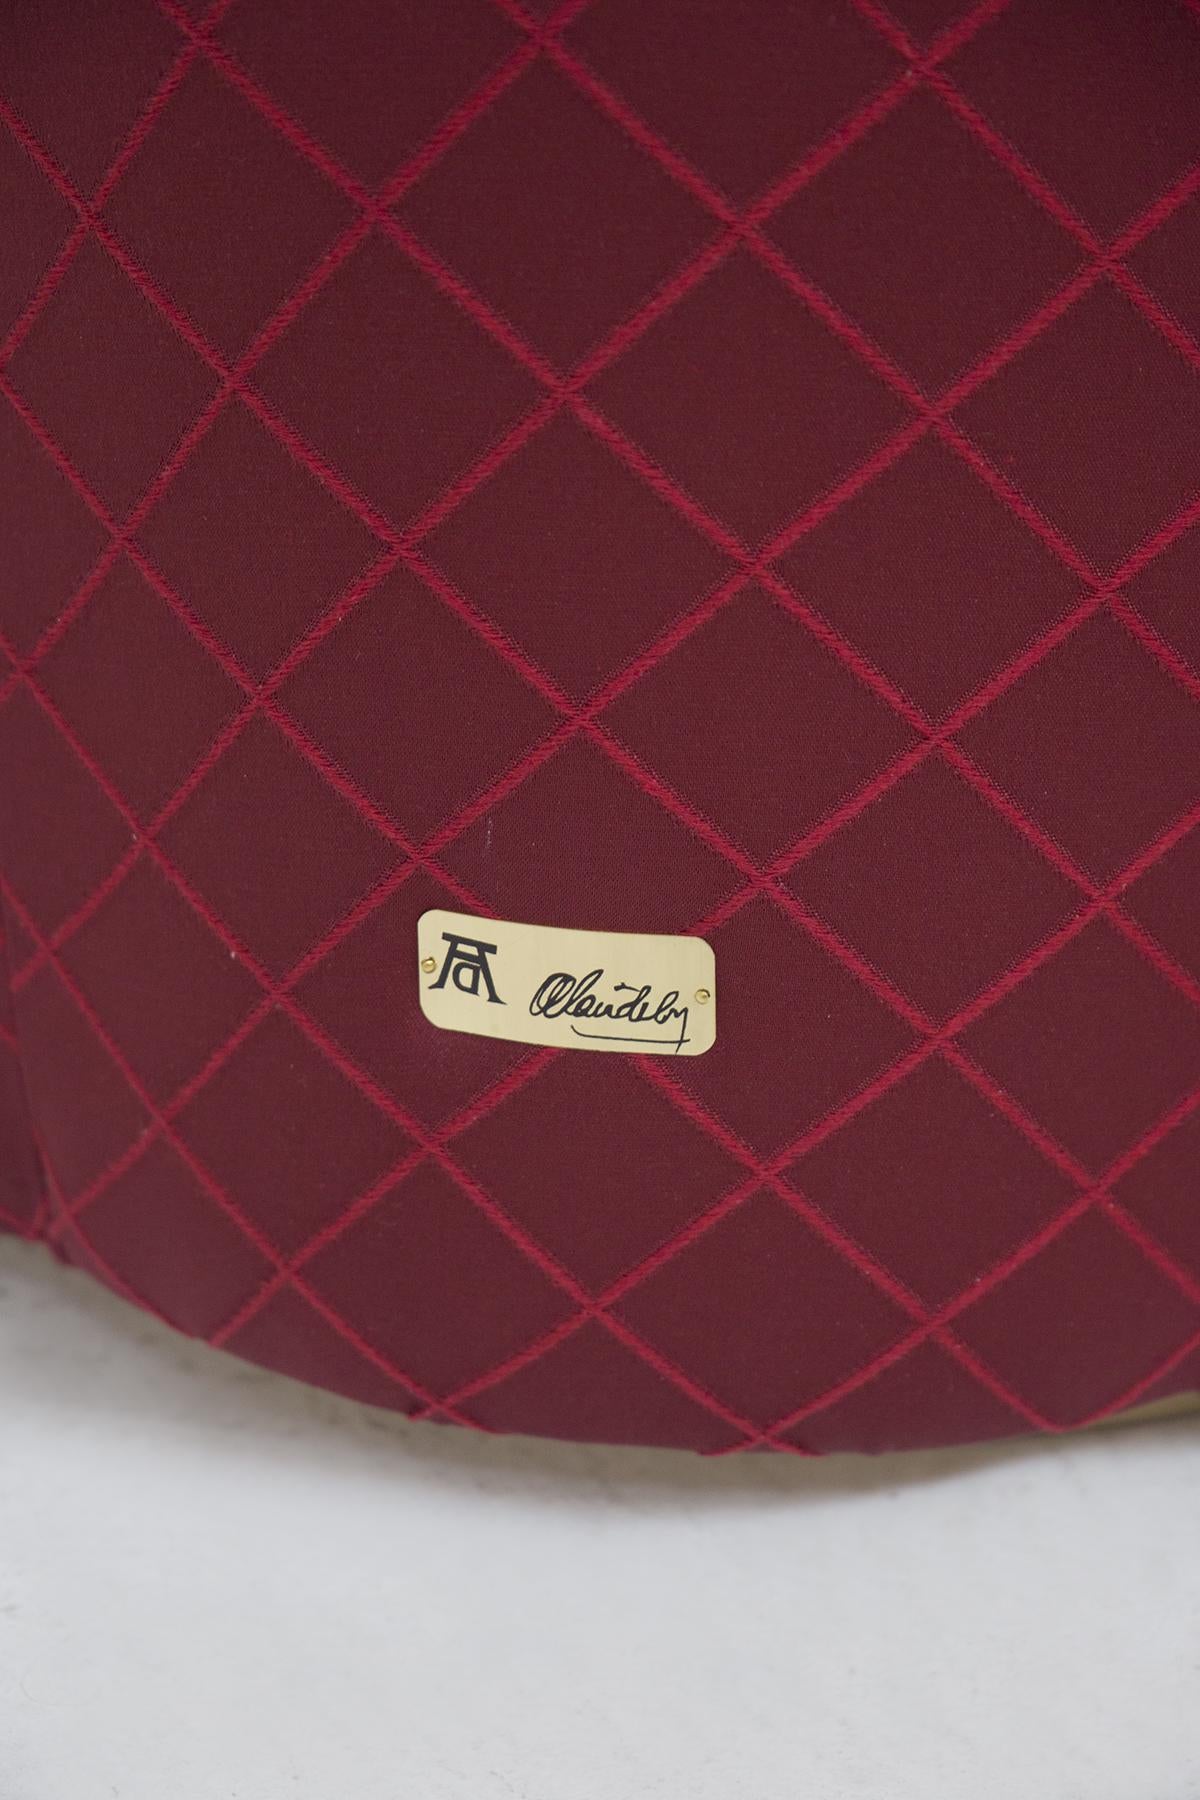 Alain Delon Vintage “Salon” Red Pouf, Original Label 1